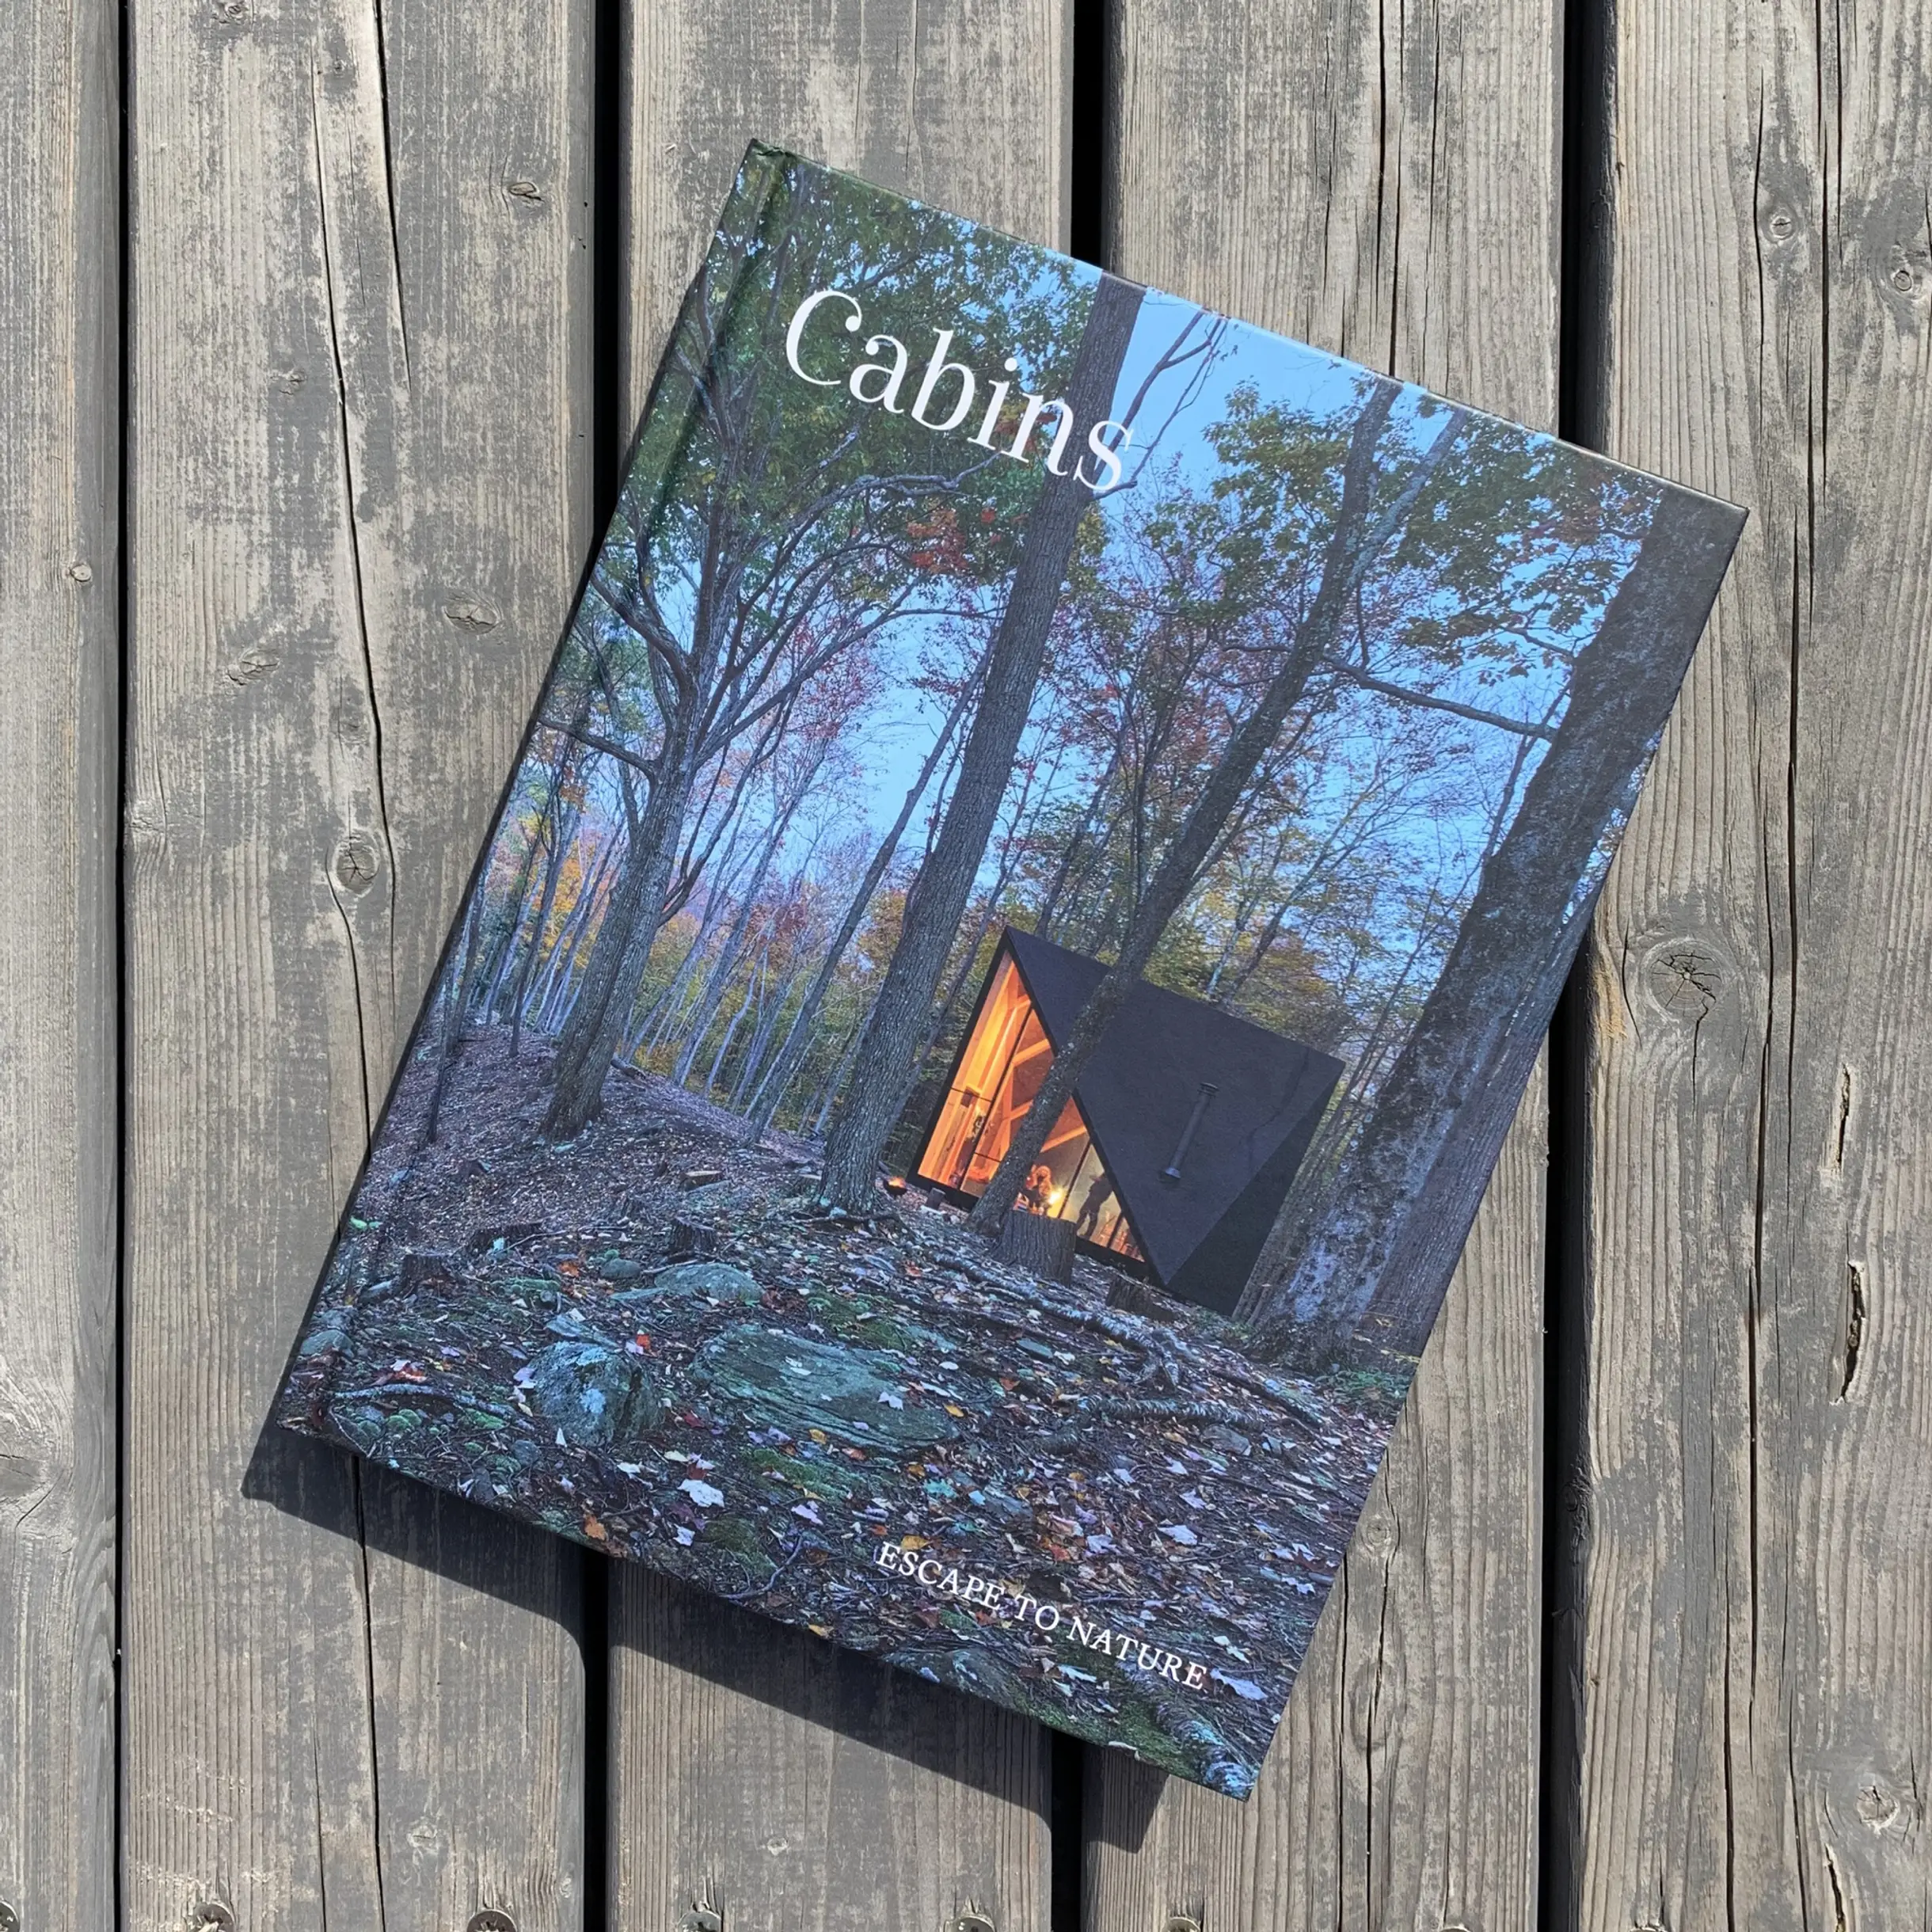 Cabins – Escape to the Nature